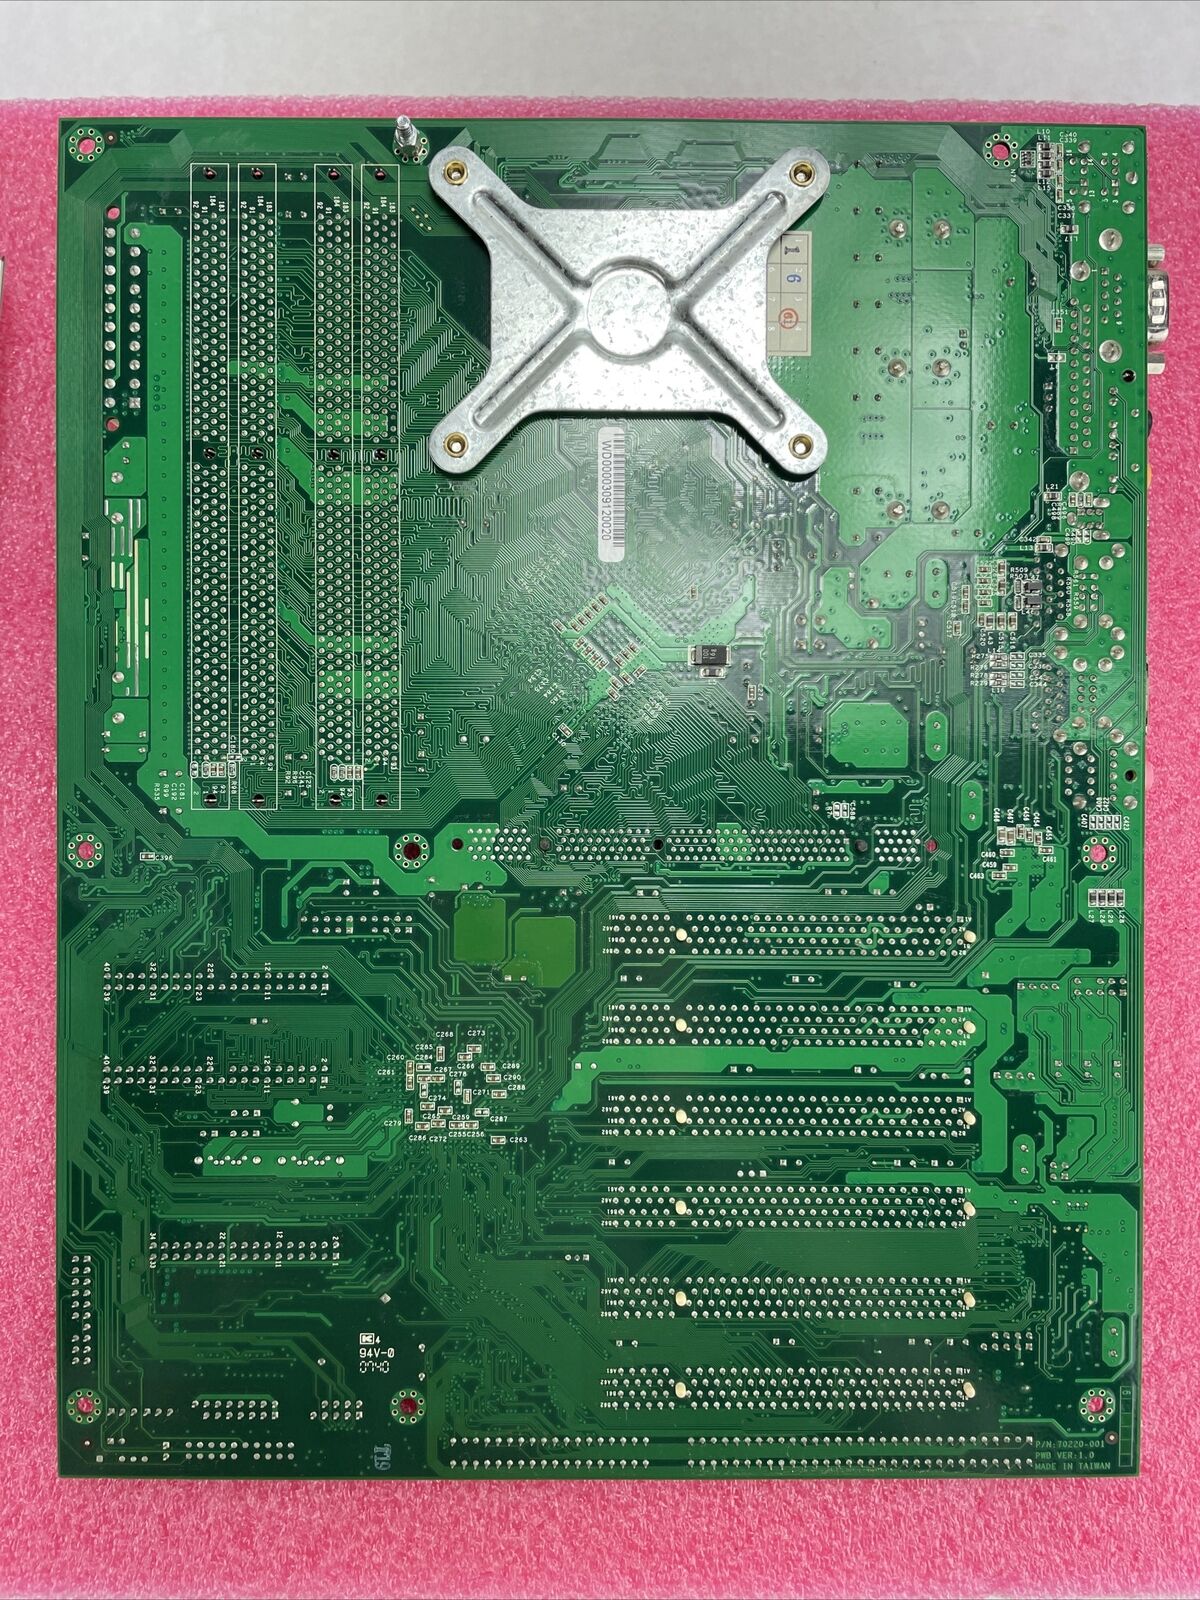 70220-001 PWB VER 1.0 Motherboard Intel Pentium 4 3GHz 512MB RAM w/Shield